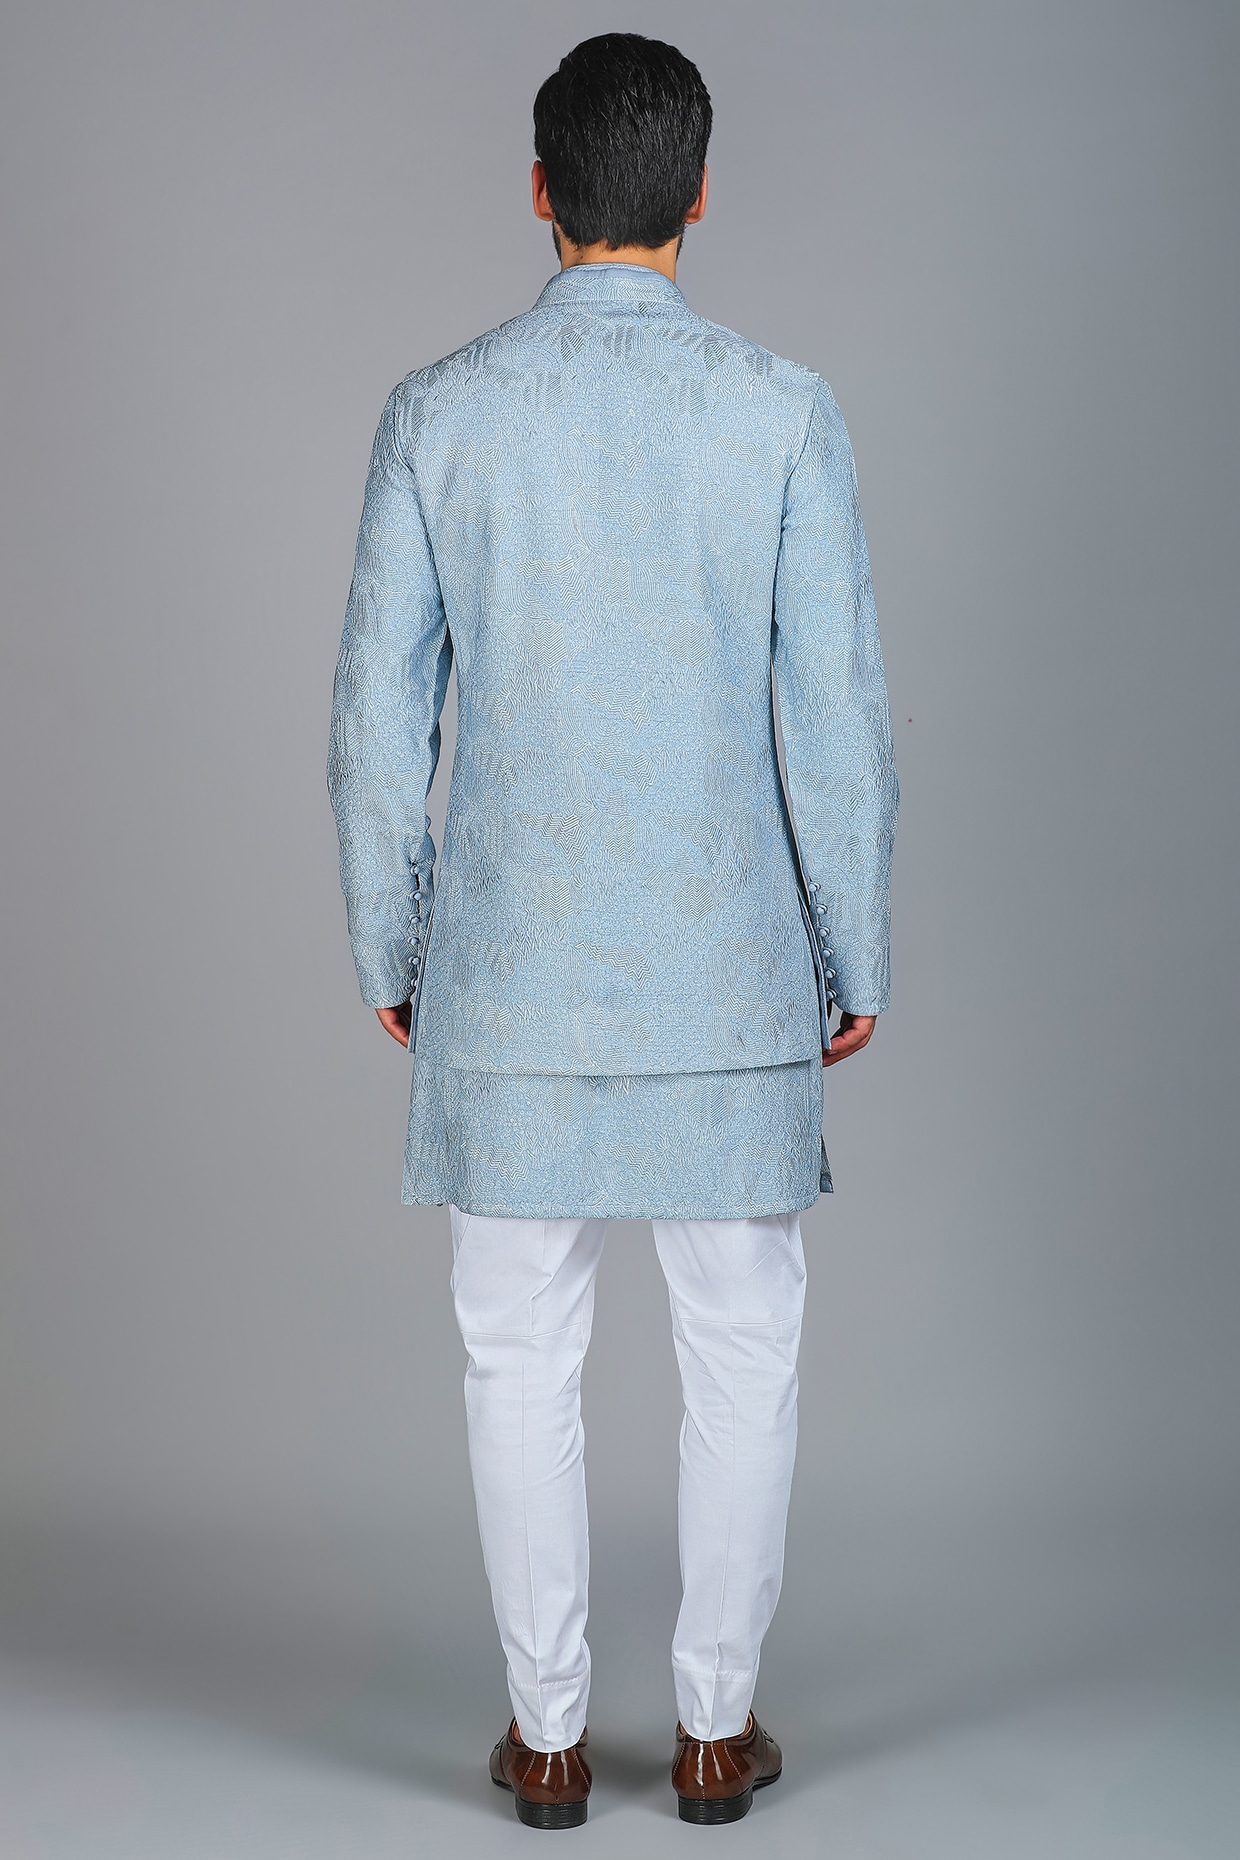 Chikankari nehru jacket Chikankari indian jacket wedding jacket party jacket  man | eBay